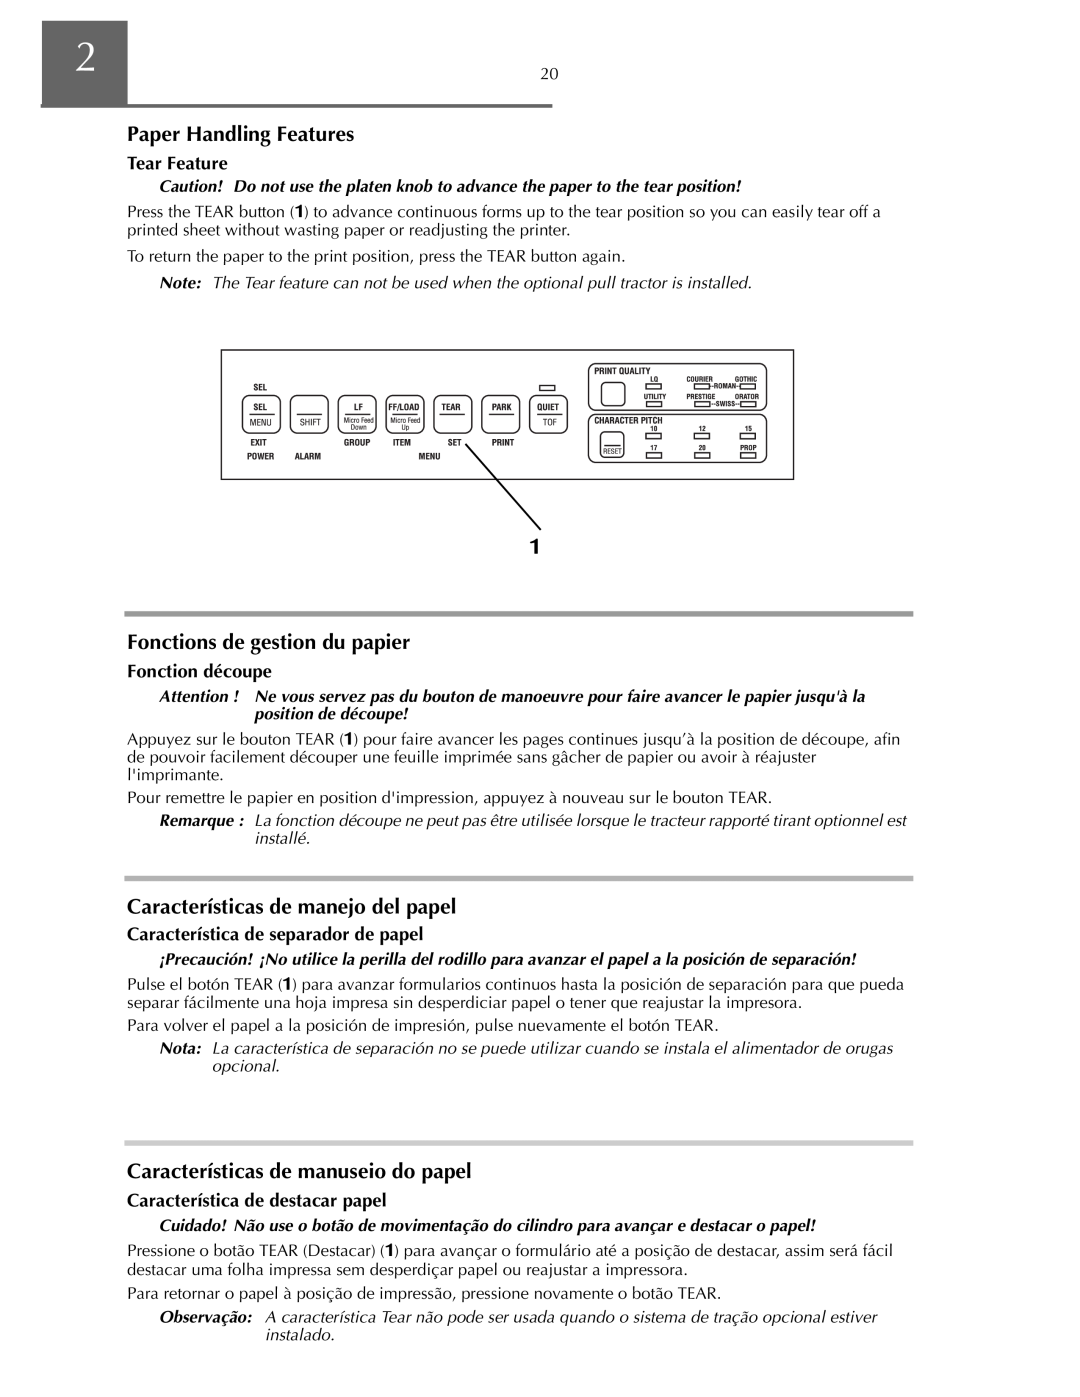 Oki ML590 manual Características de manejo del papel, Características de manuseio do papel, Fonction découpe 